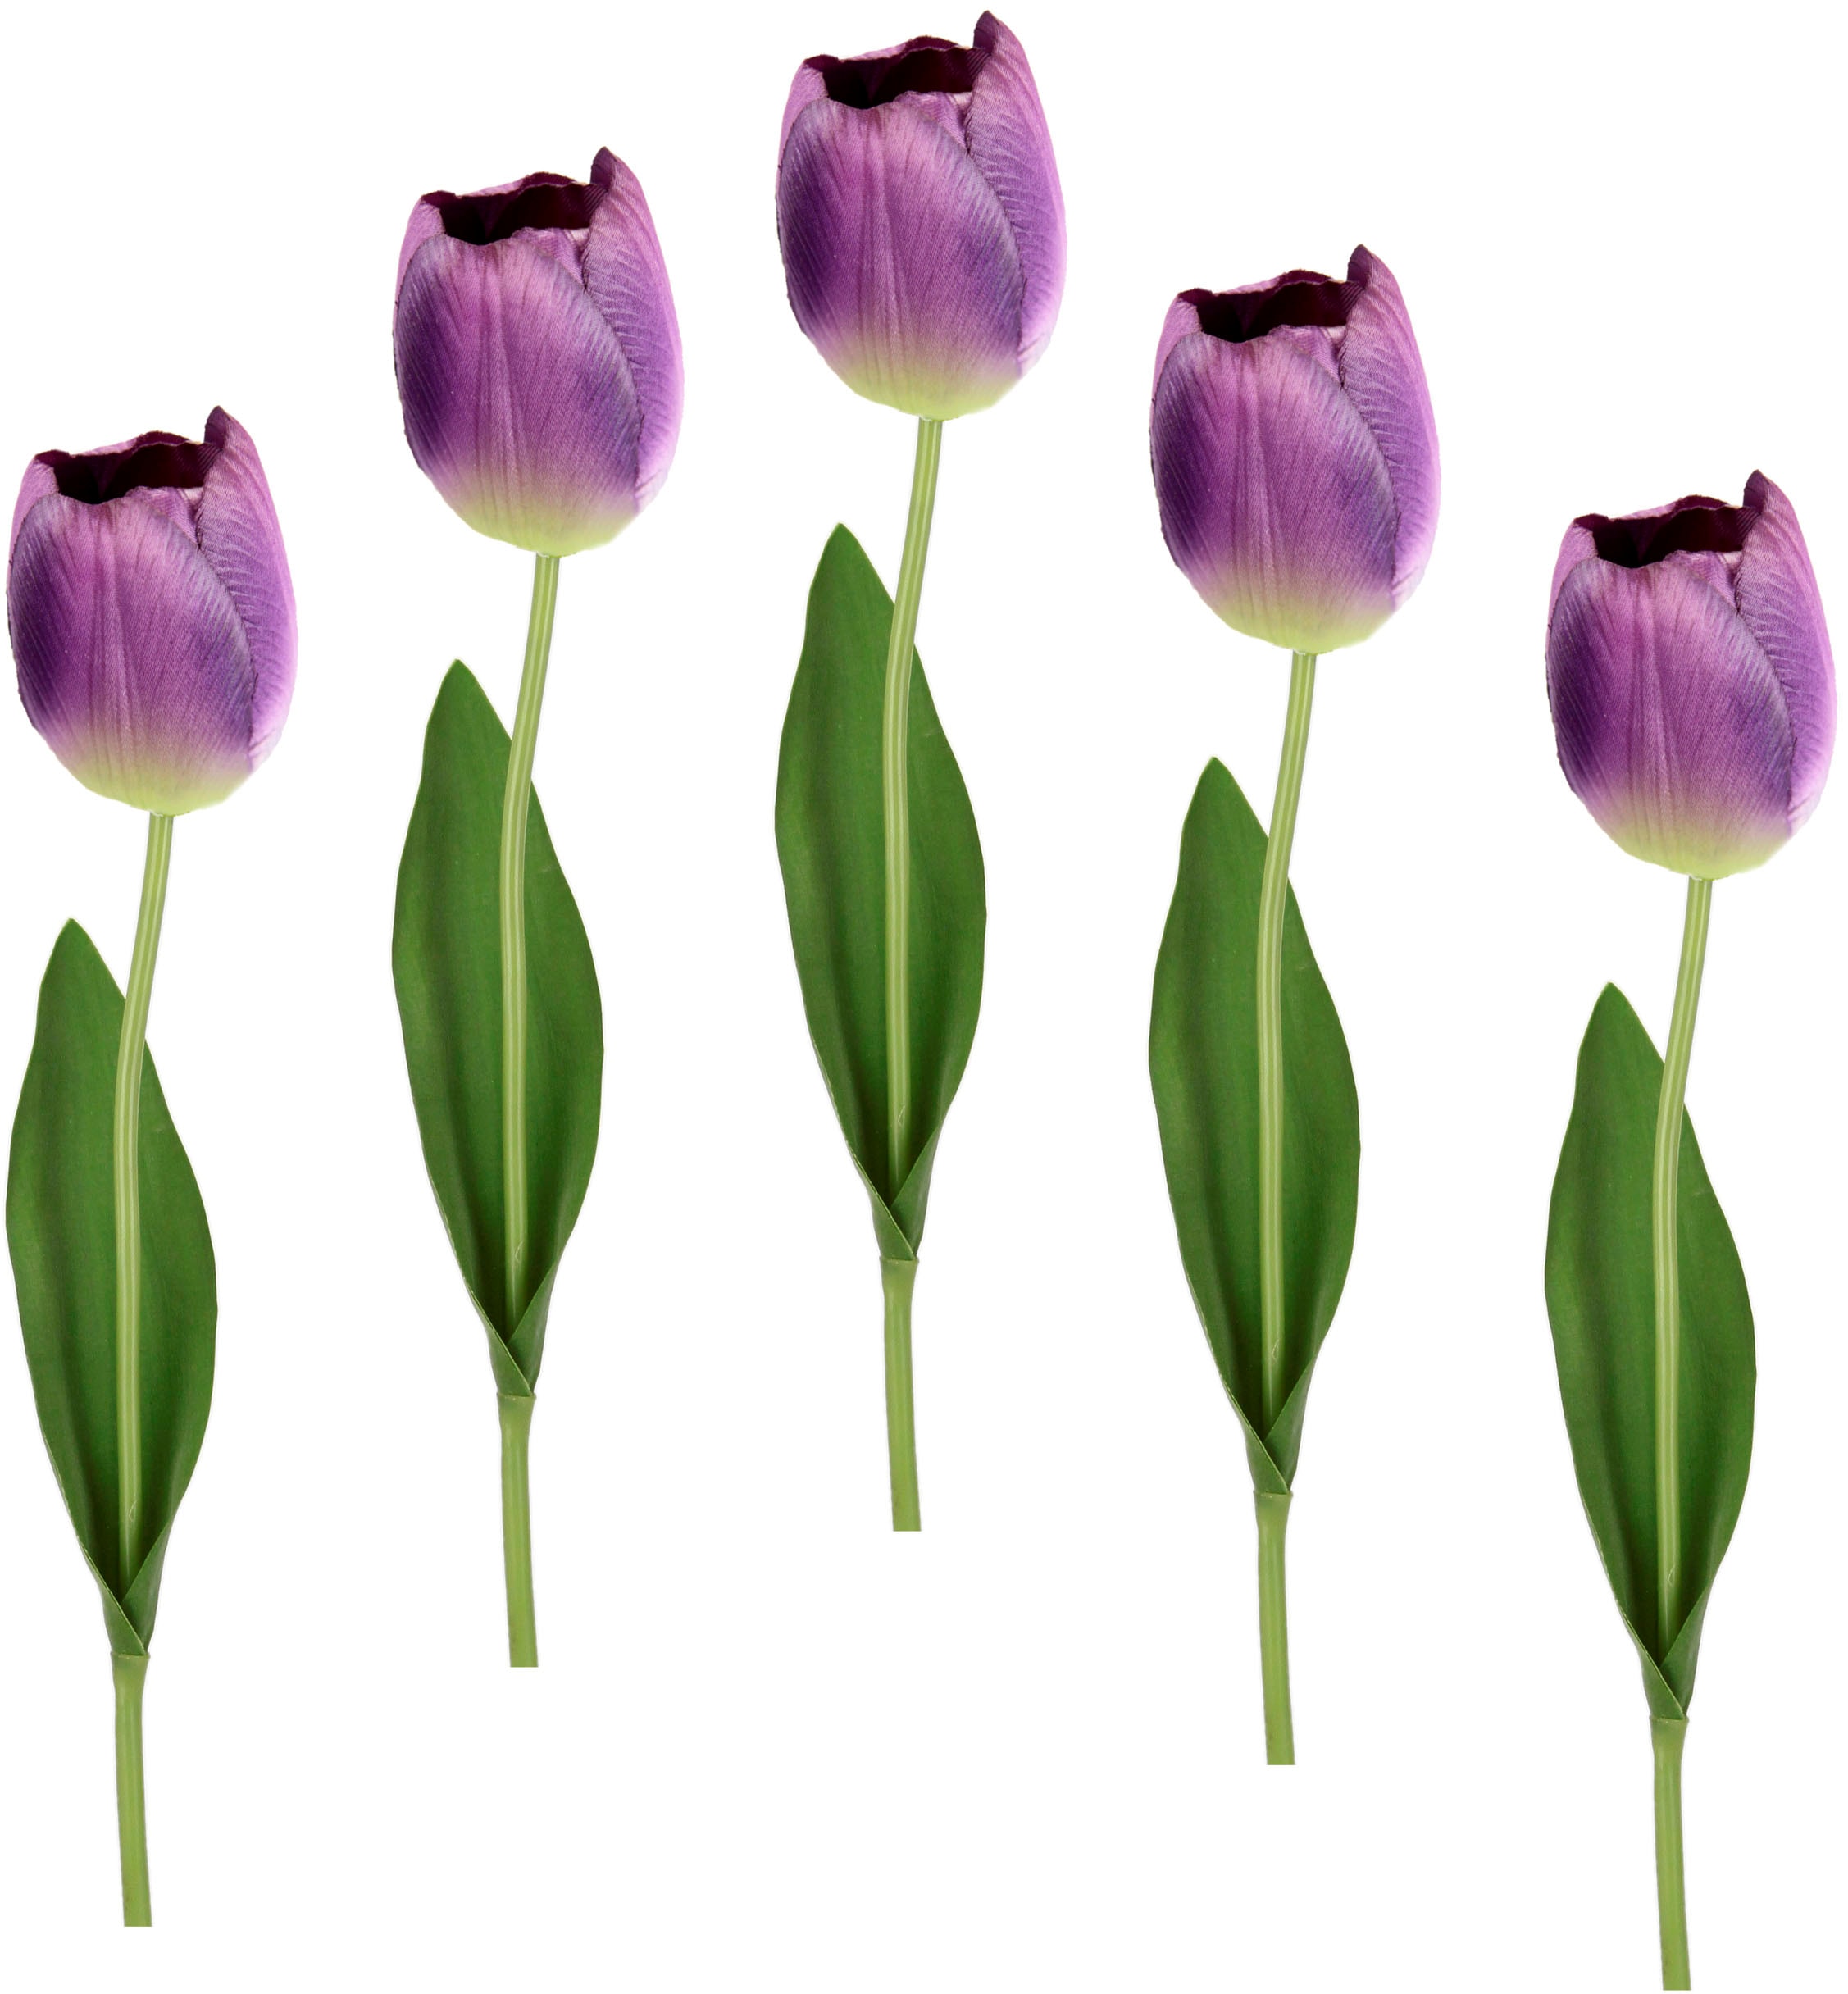 jetzt »Real kaufen Tulpen«, Stielblume 5er I.GE.A. Kunstblumen, Kunstblume Touch künstliche Tulpenknospen, Set